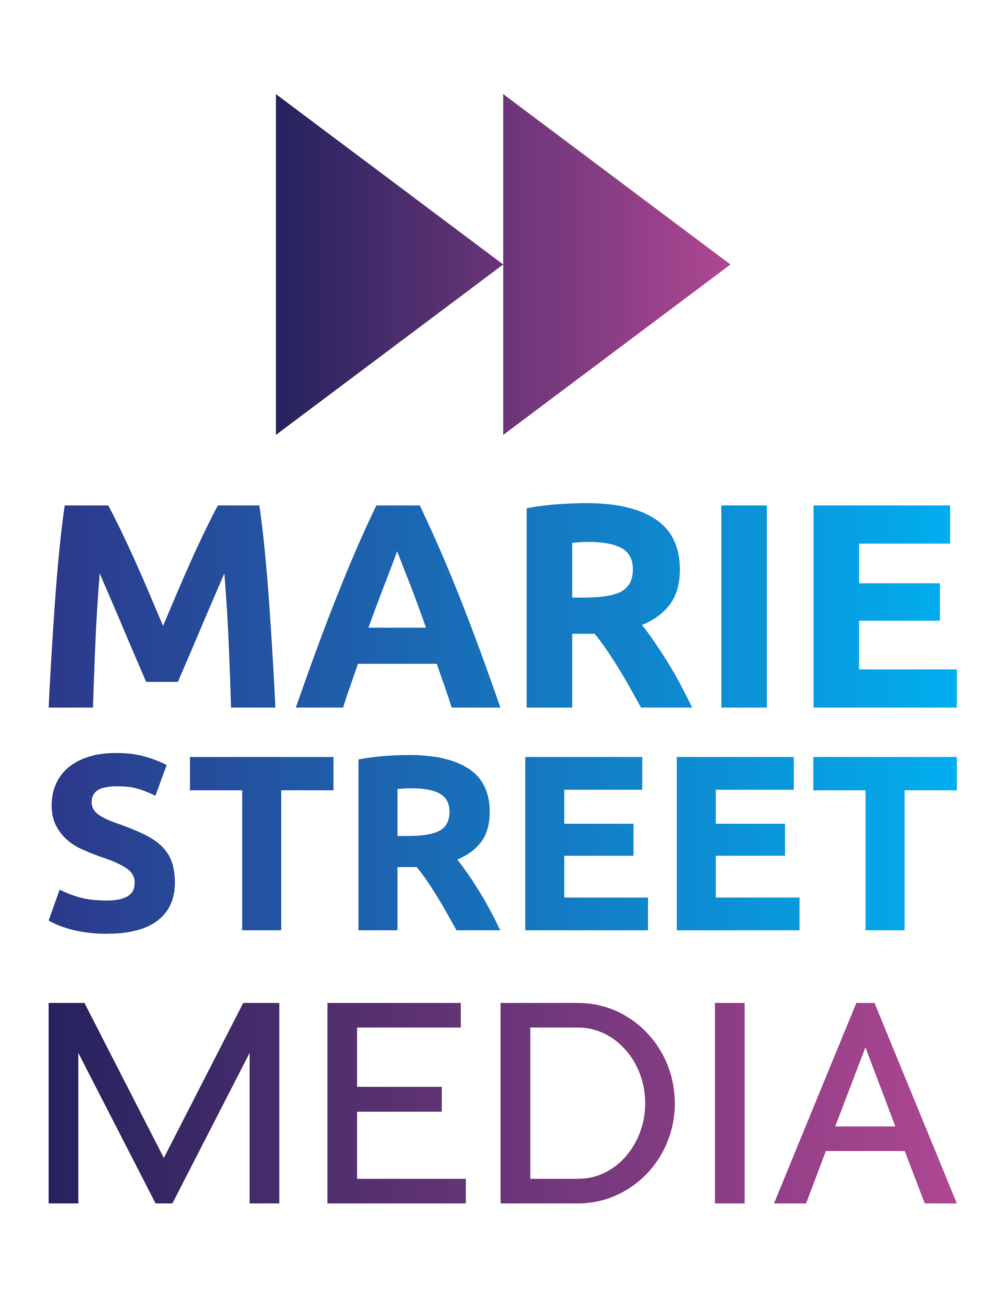 Marie Street Media